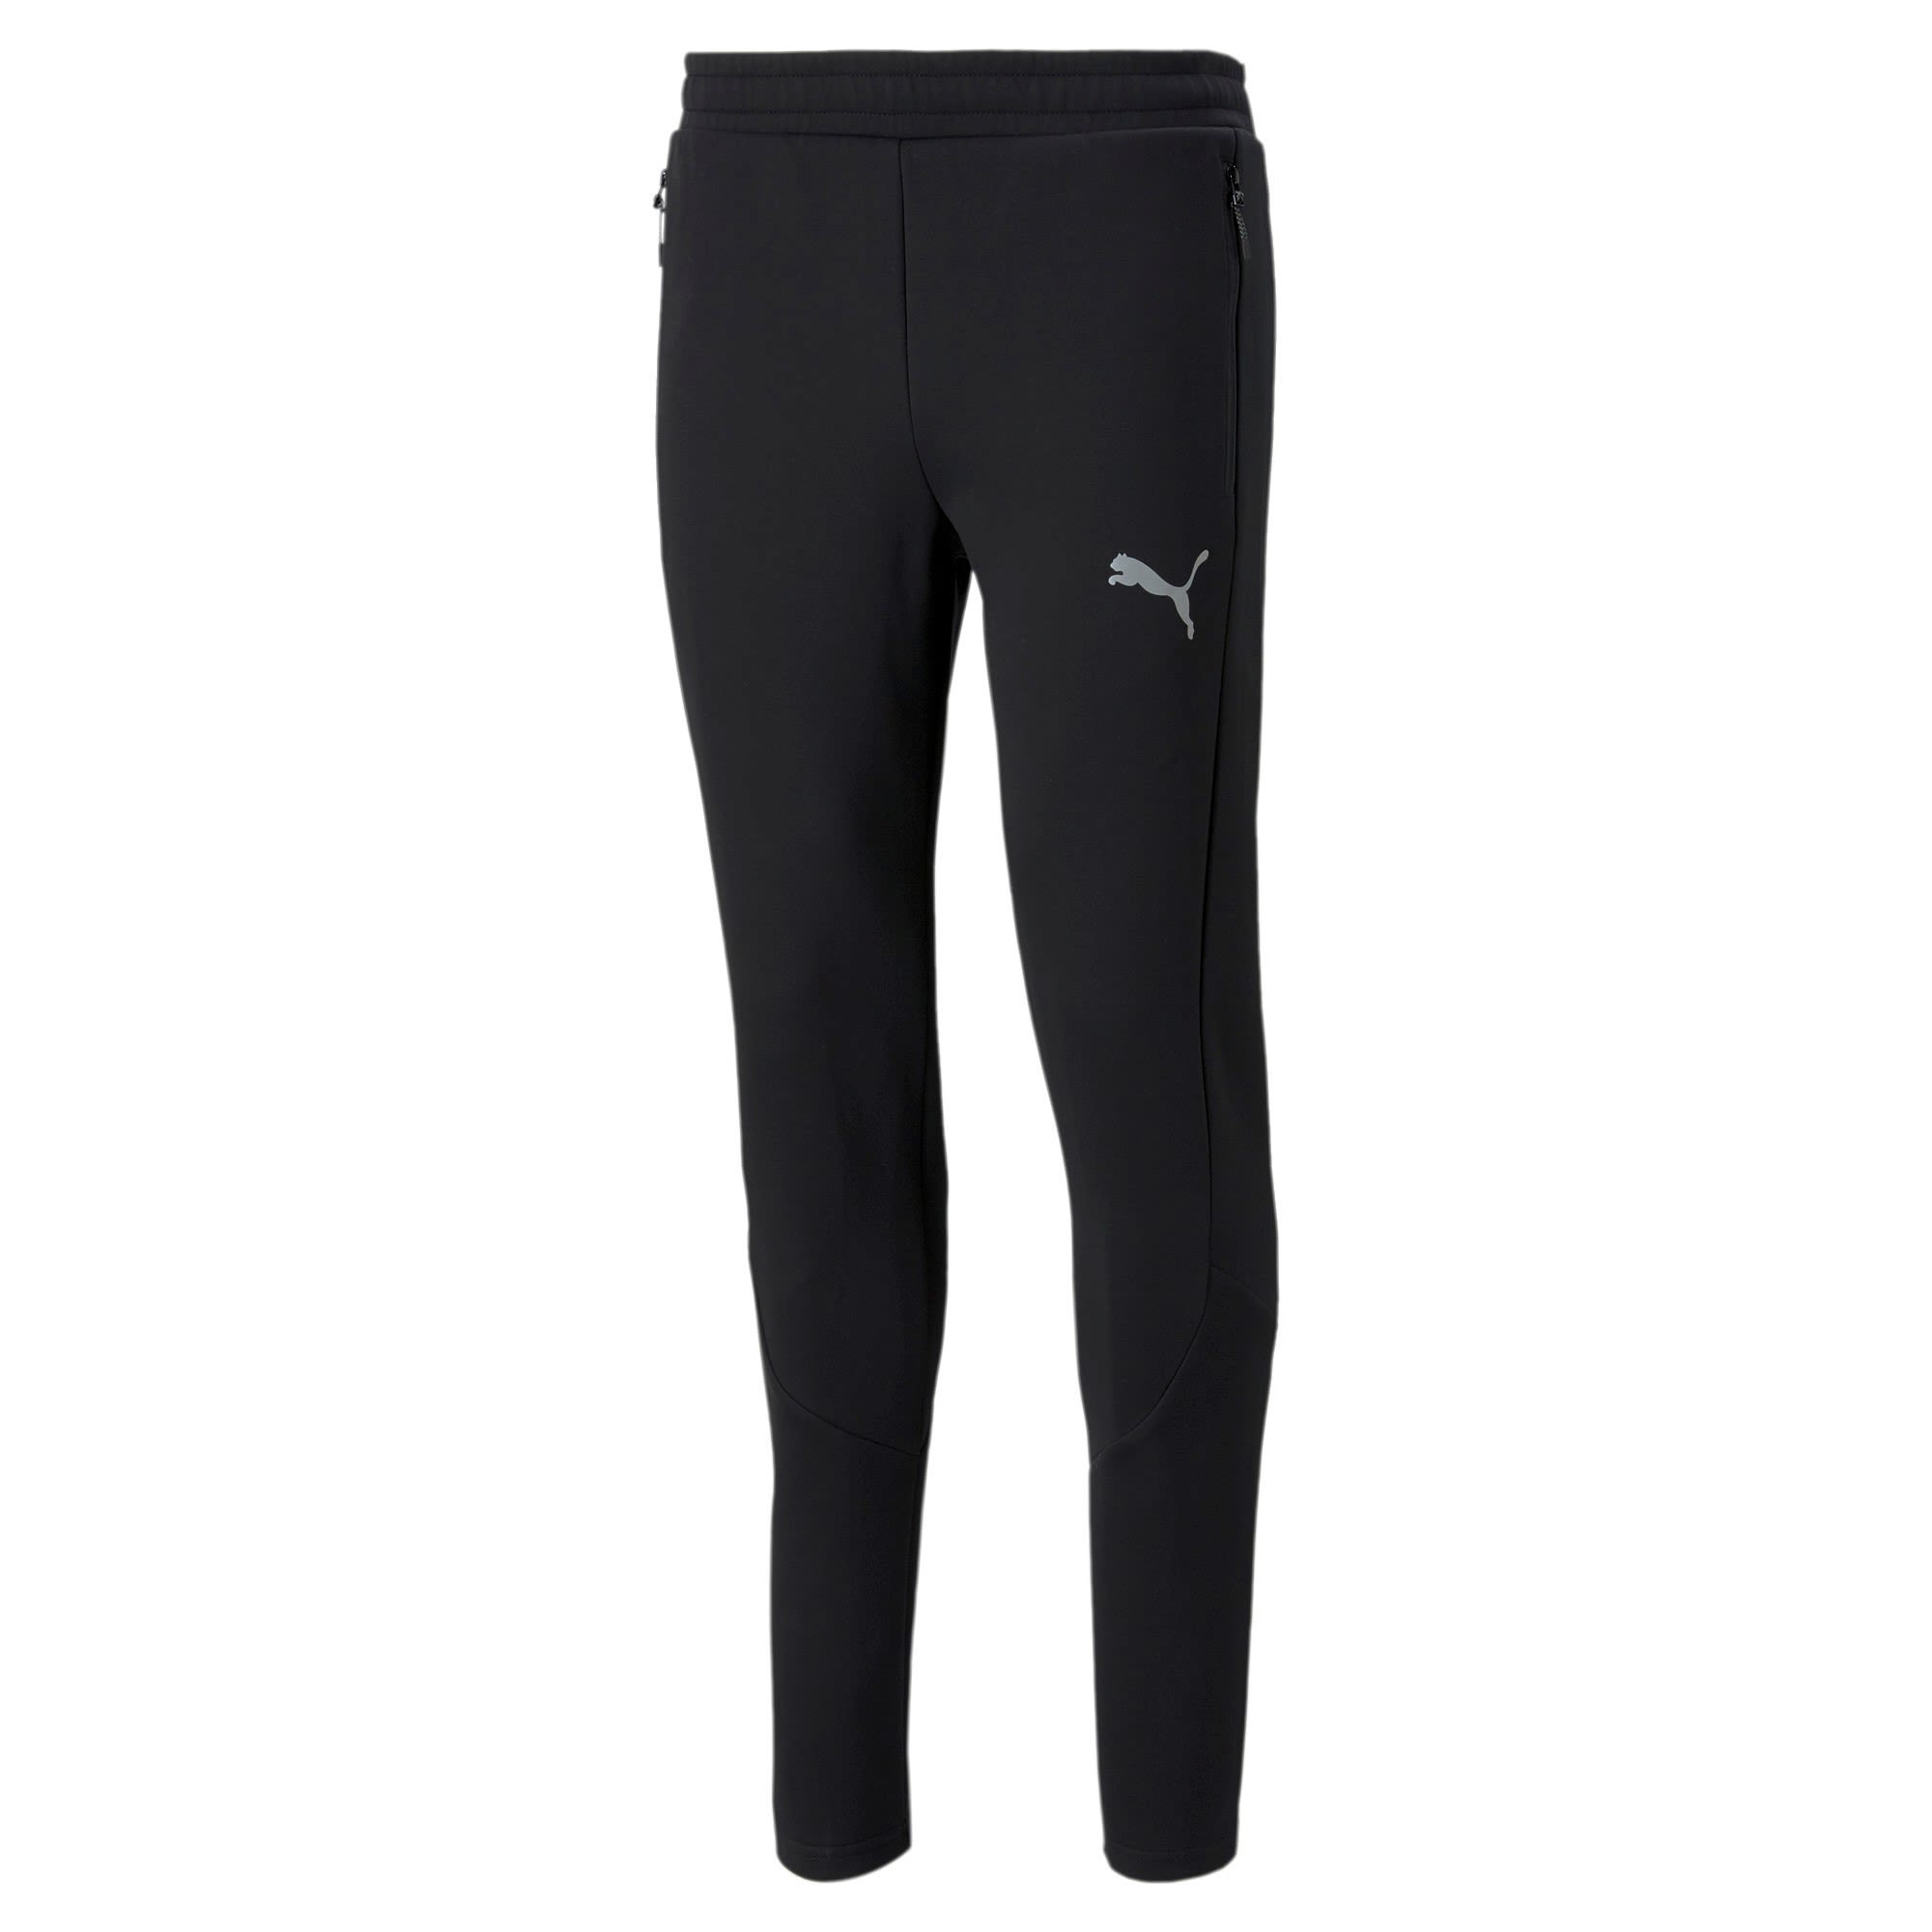 Puma Evostripe Pants Schwarz- Male Softshellhosen- Grsse XL - Farbe Puma Black